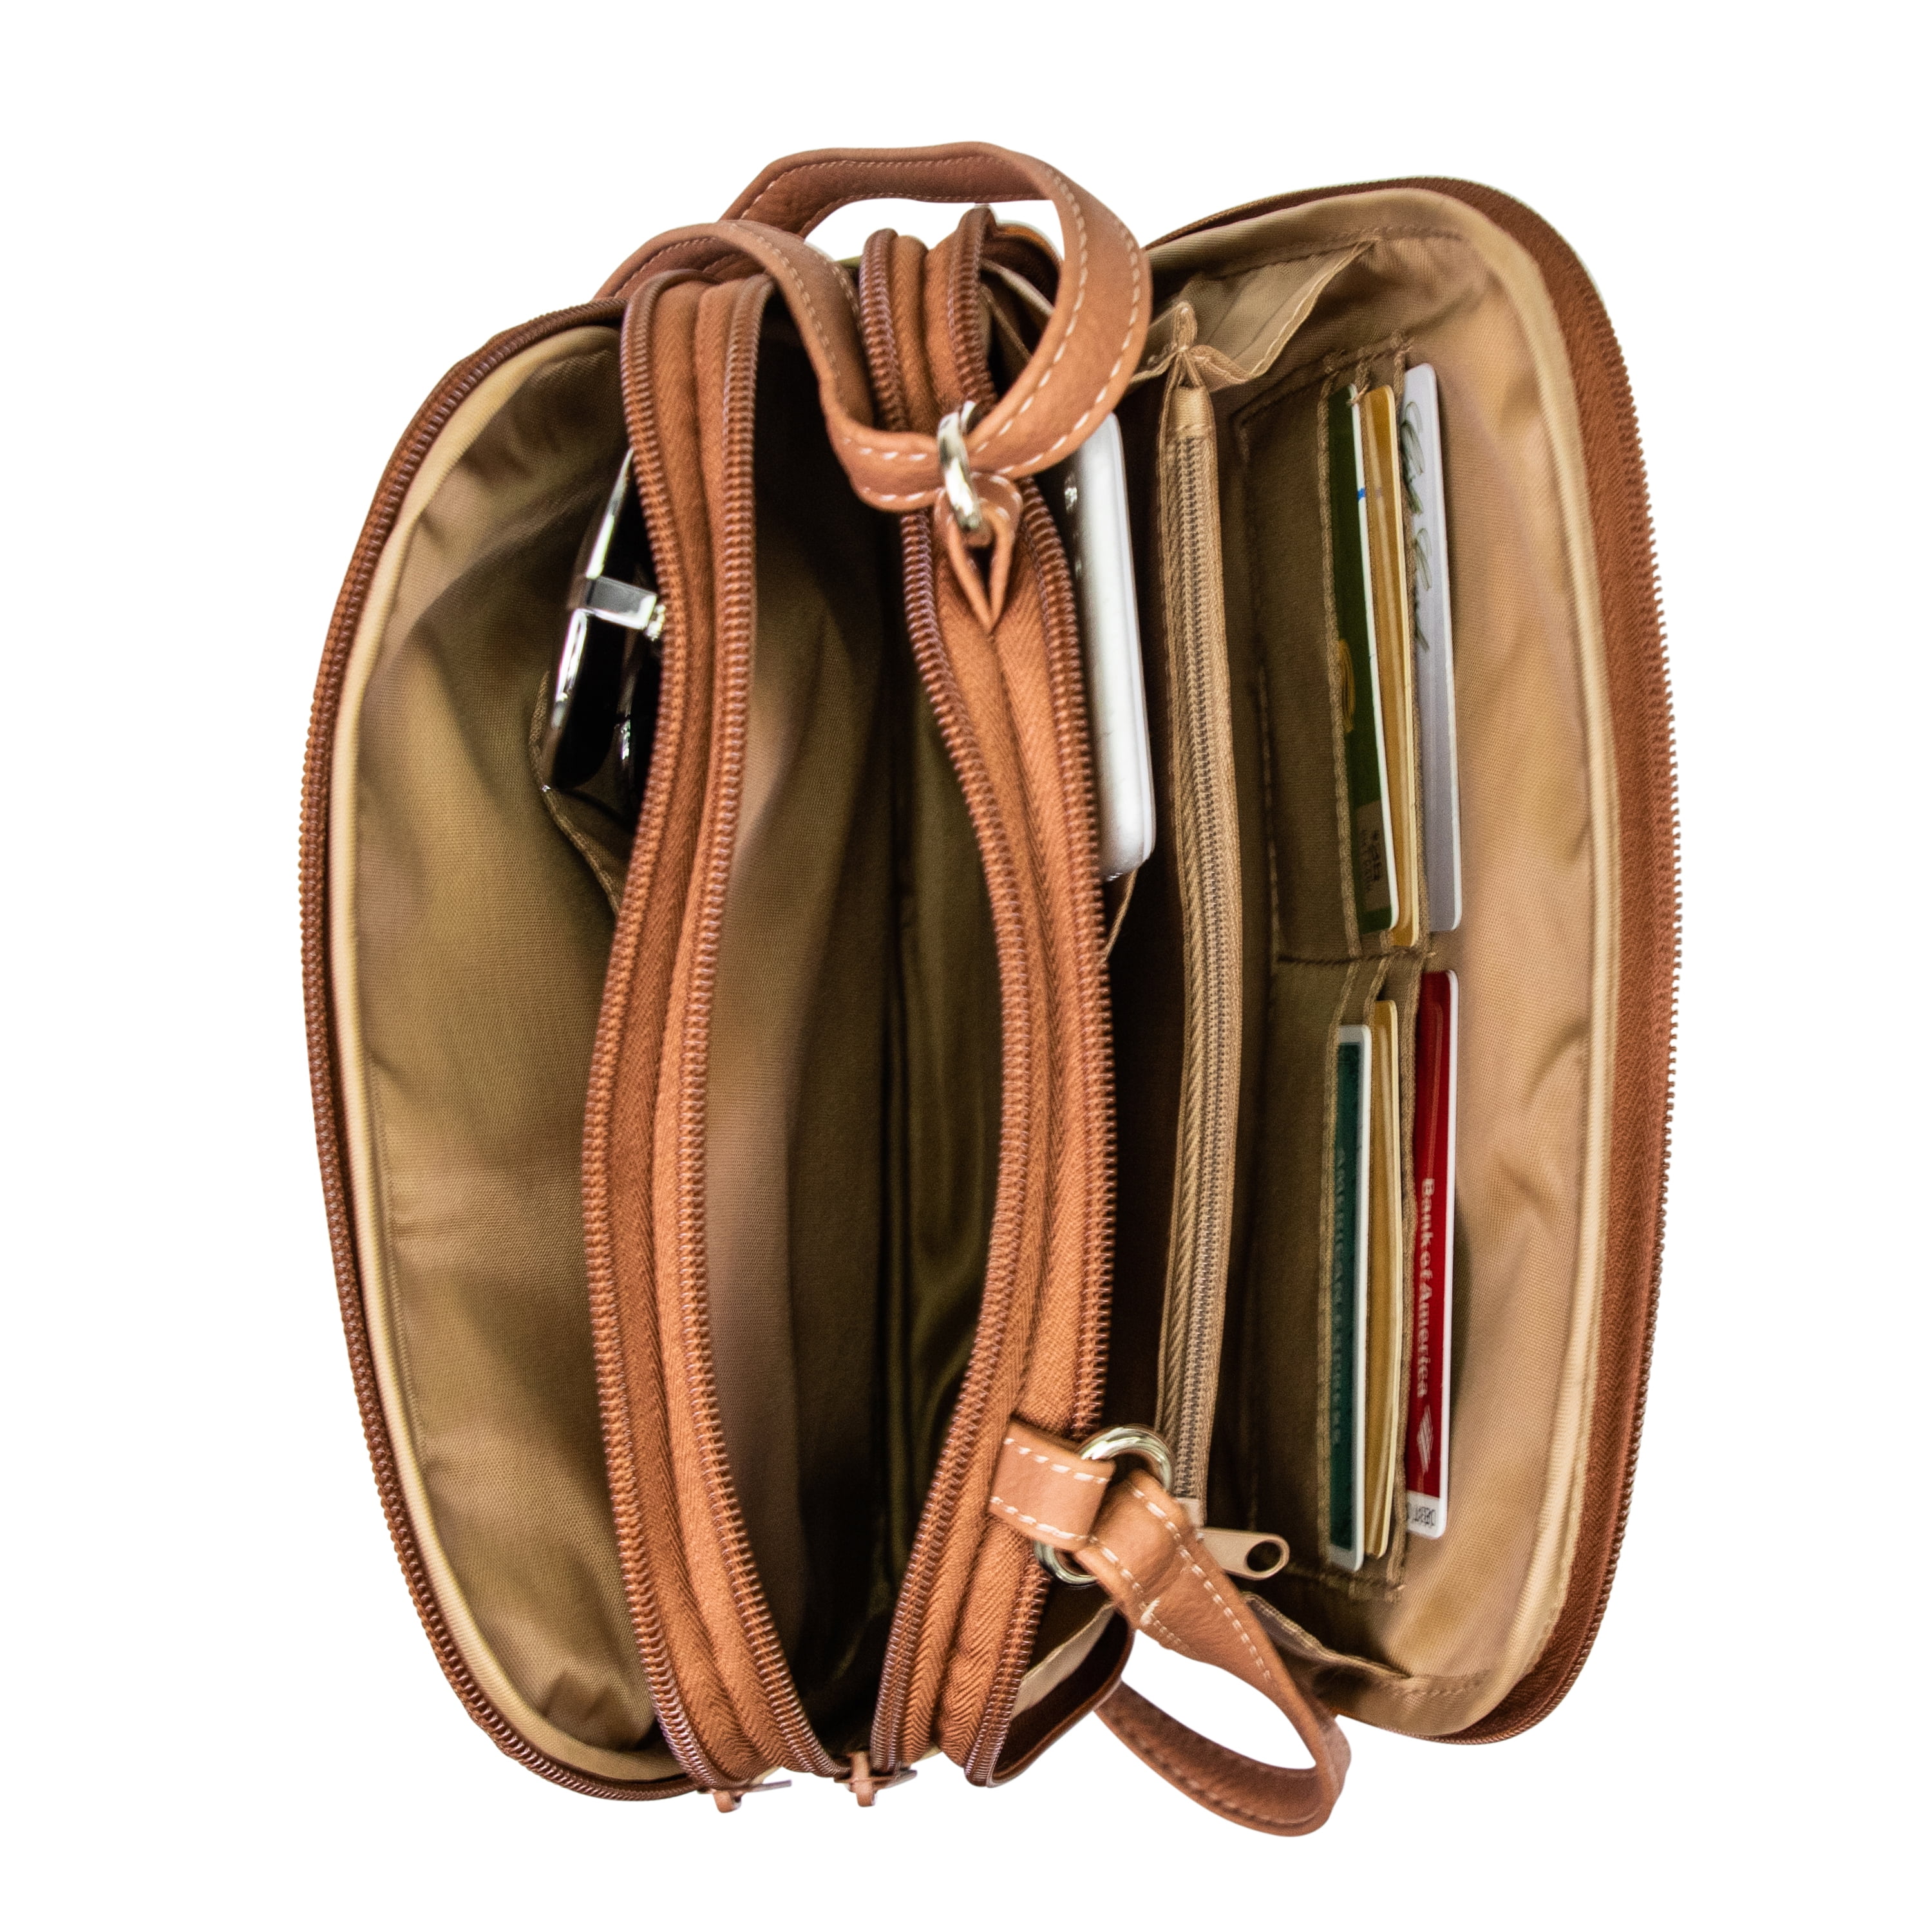 Zippy Triple Compartment Crossbody Bag – MultiSac Handbags